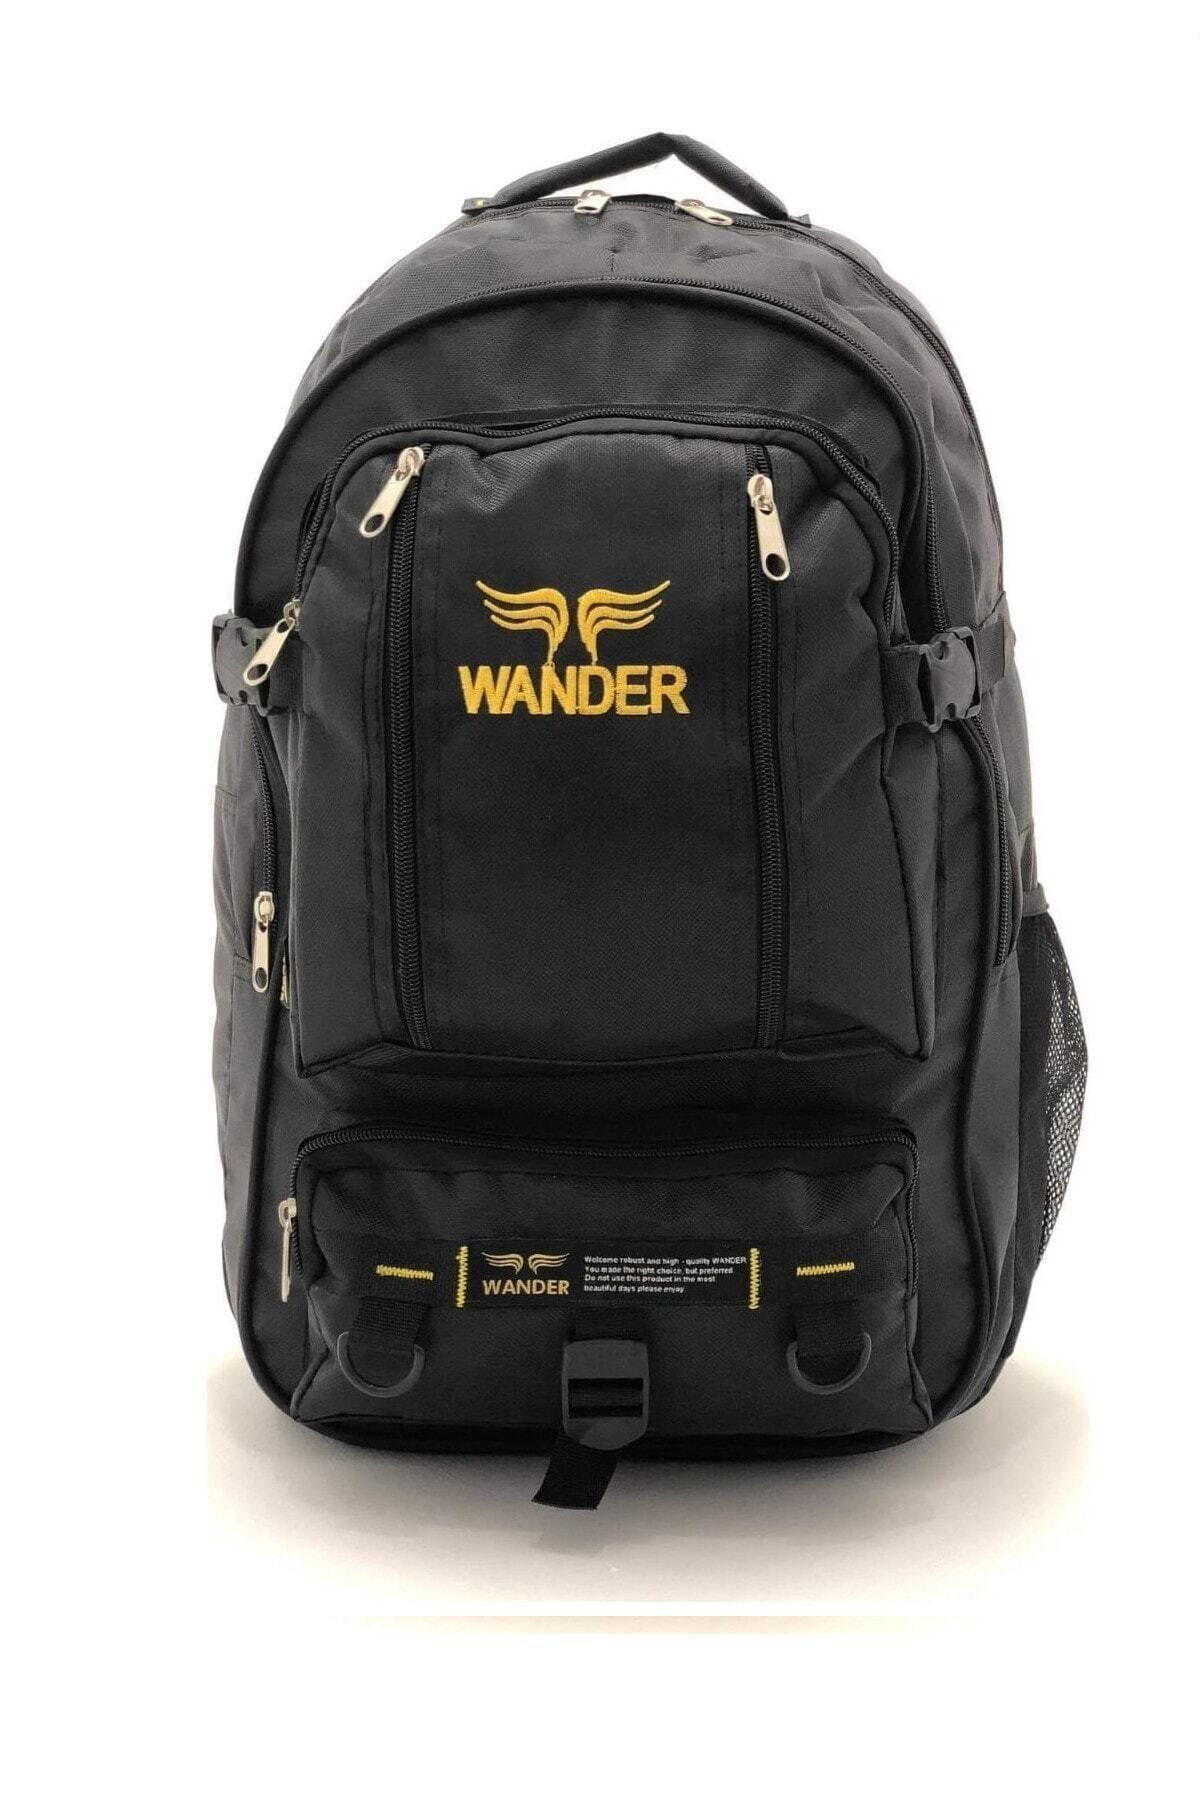 Wander Unisex Siyah Spor Çantası 365476Tr